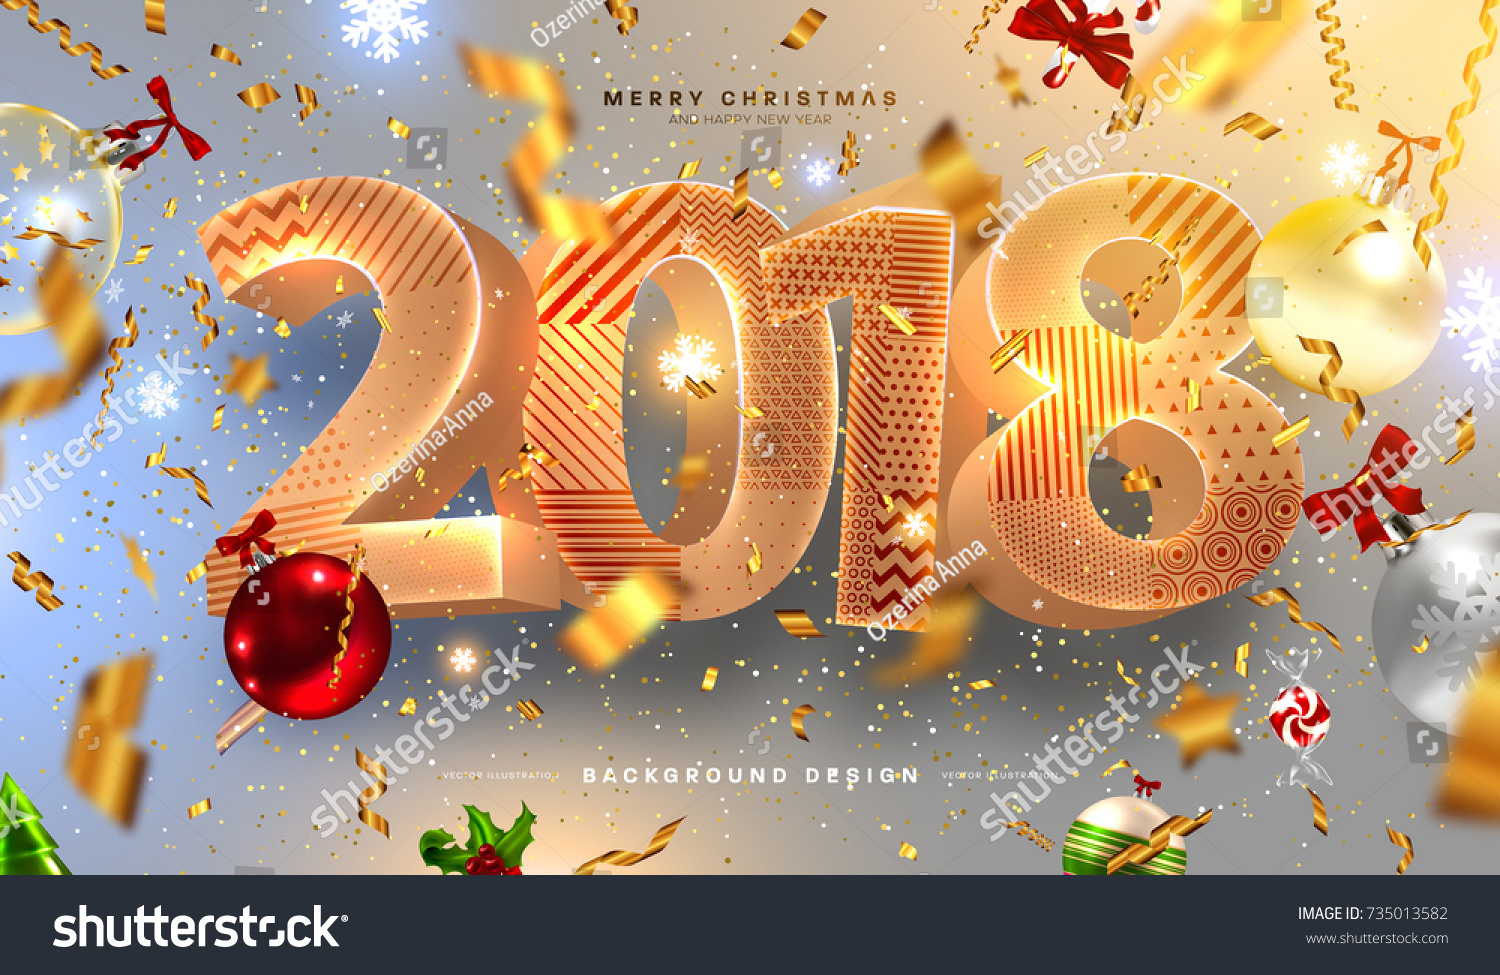 Merry Christmas Happy New Year 2018 Stock Vector 735013582 - Shutterstock